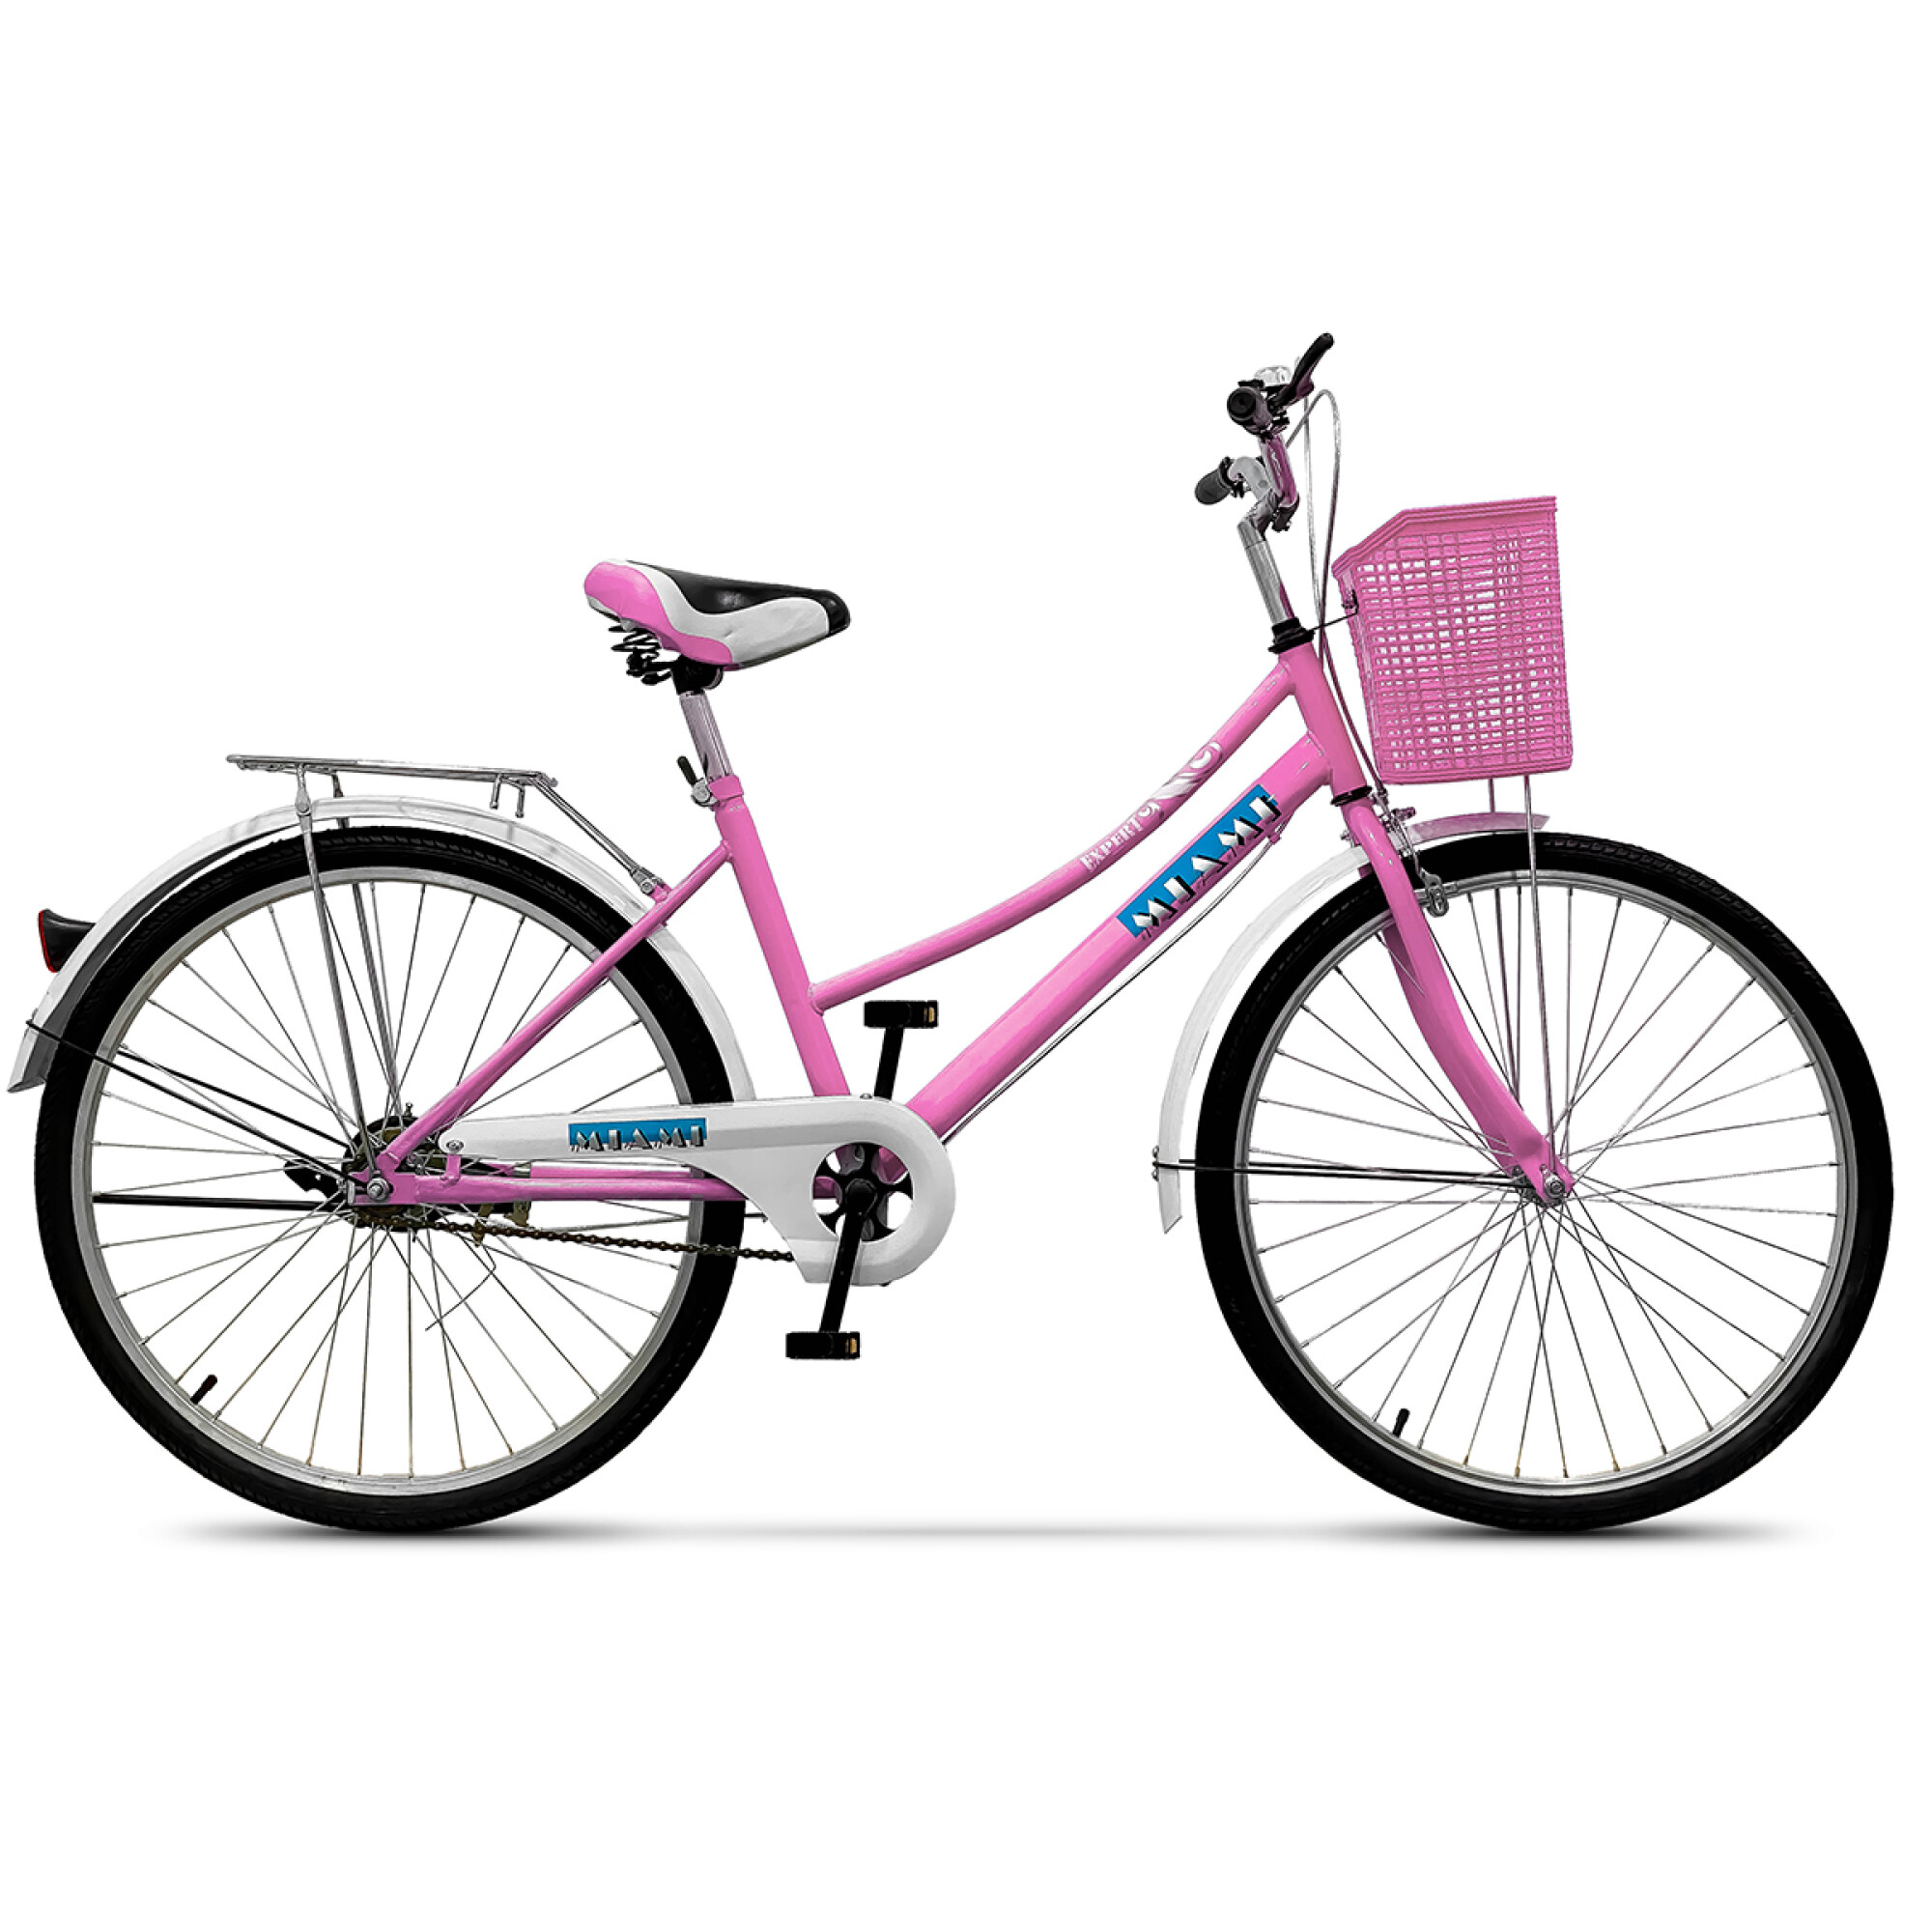 Cesta bicicleta New Looxs Asti niña 8 litros 26 cm acero rosa